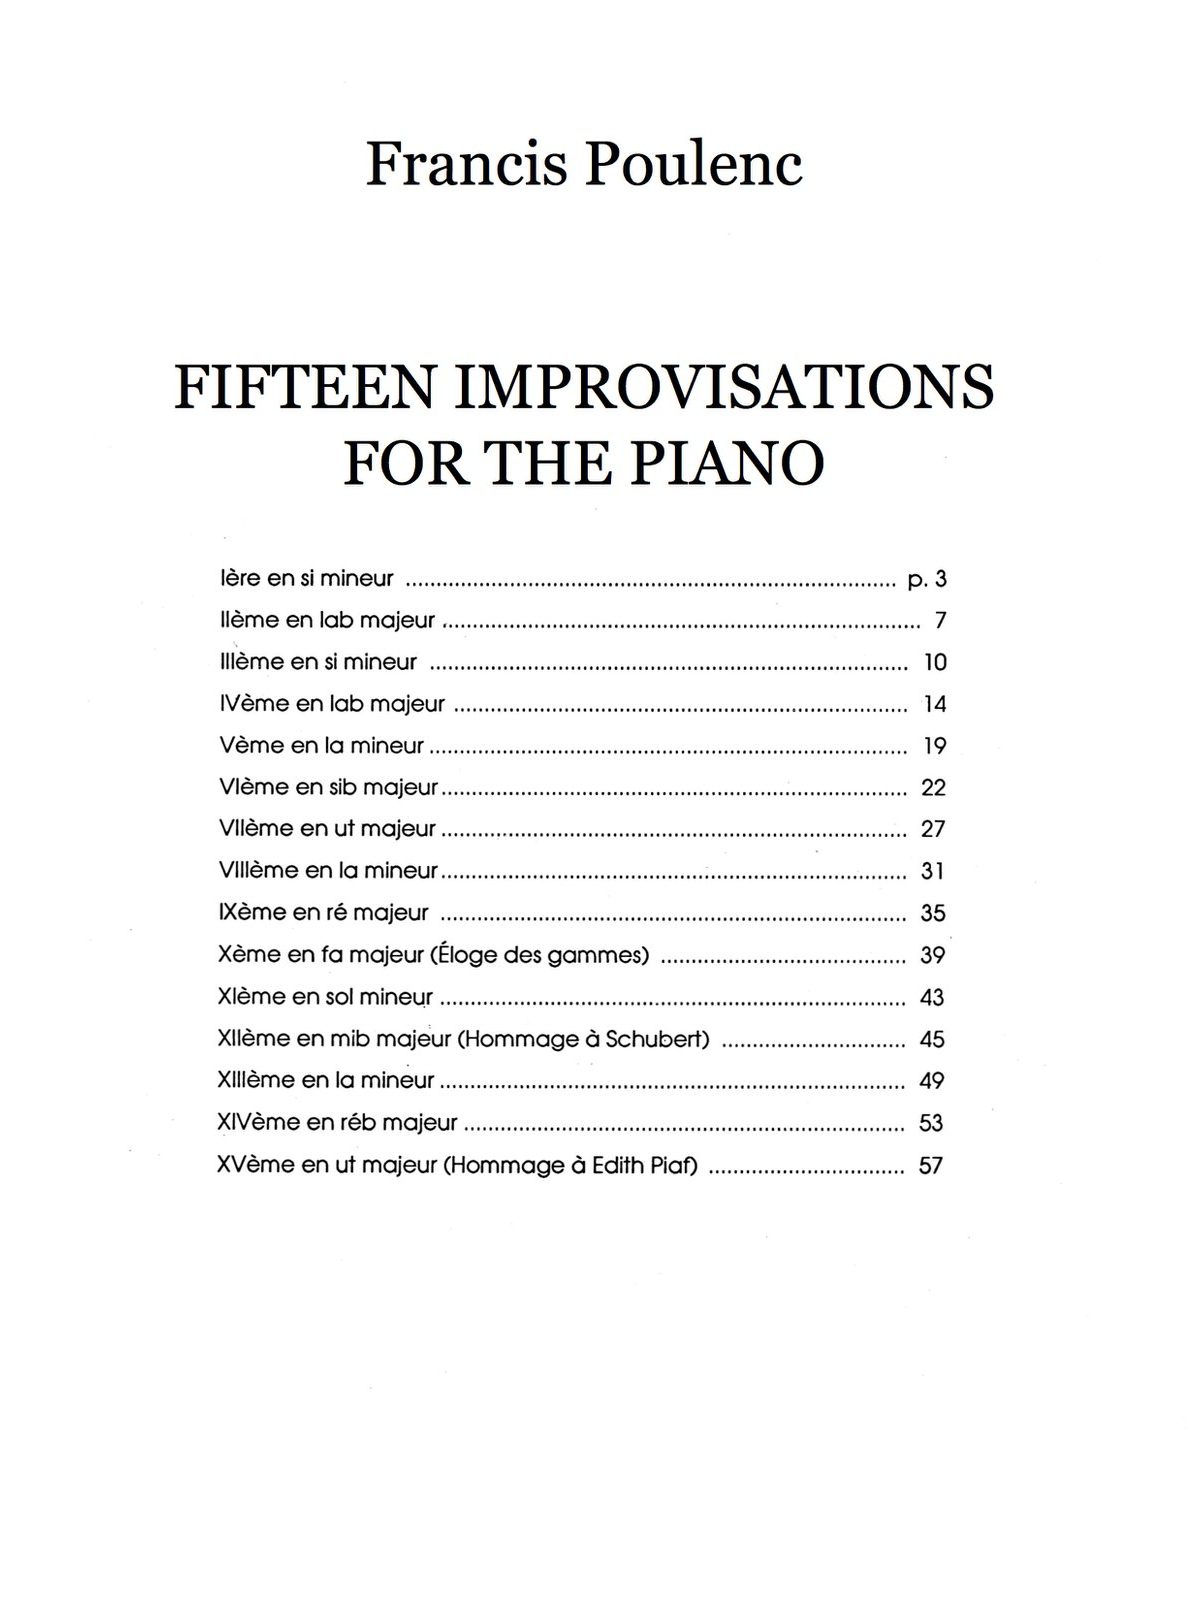 Poulenc, 15 Improvisations for Piano-p02